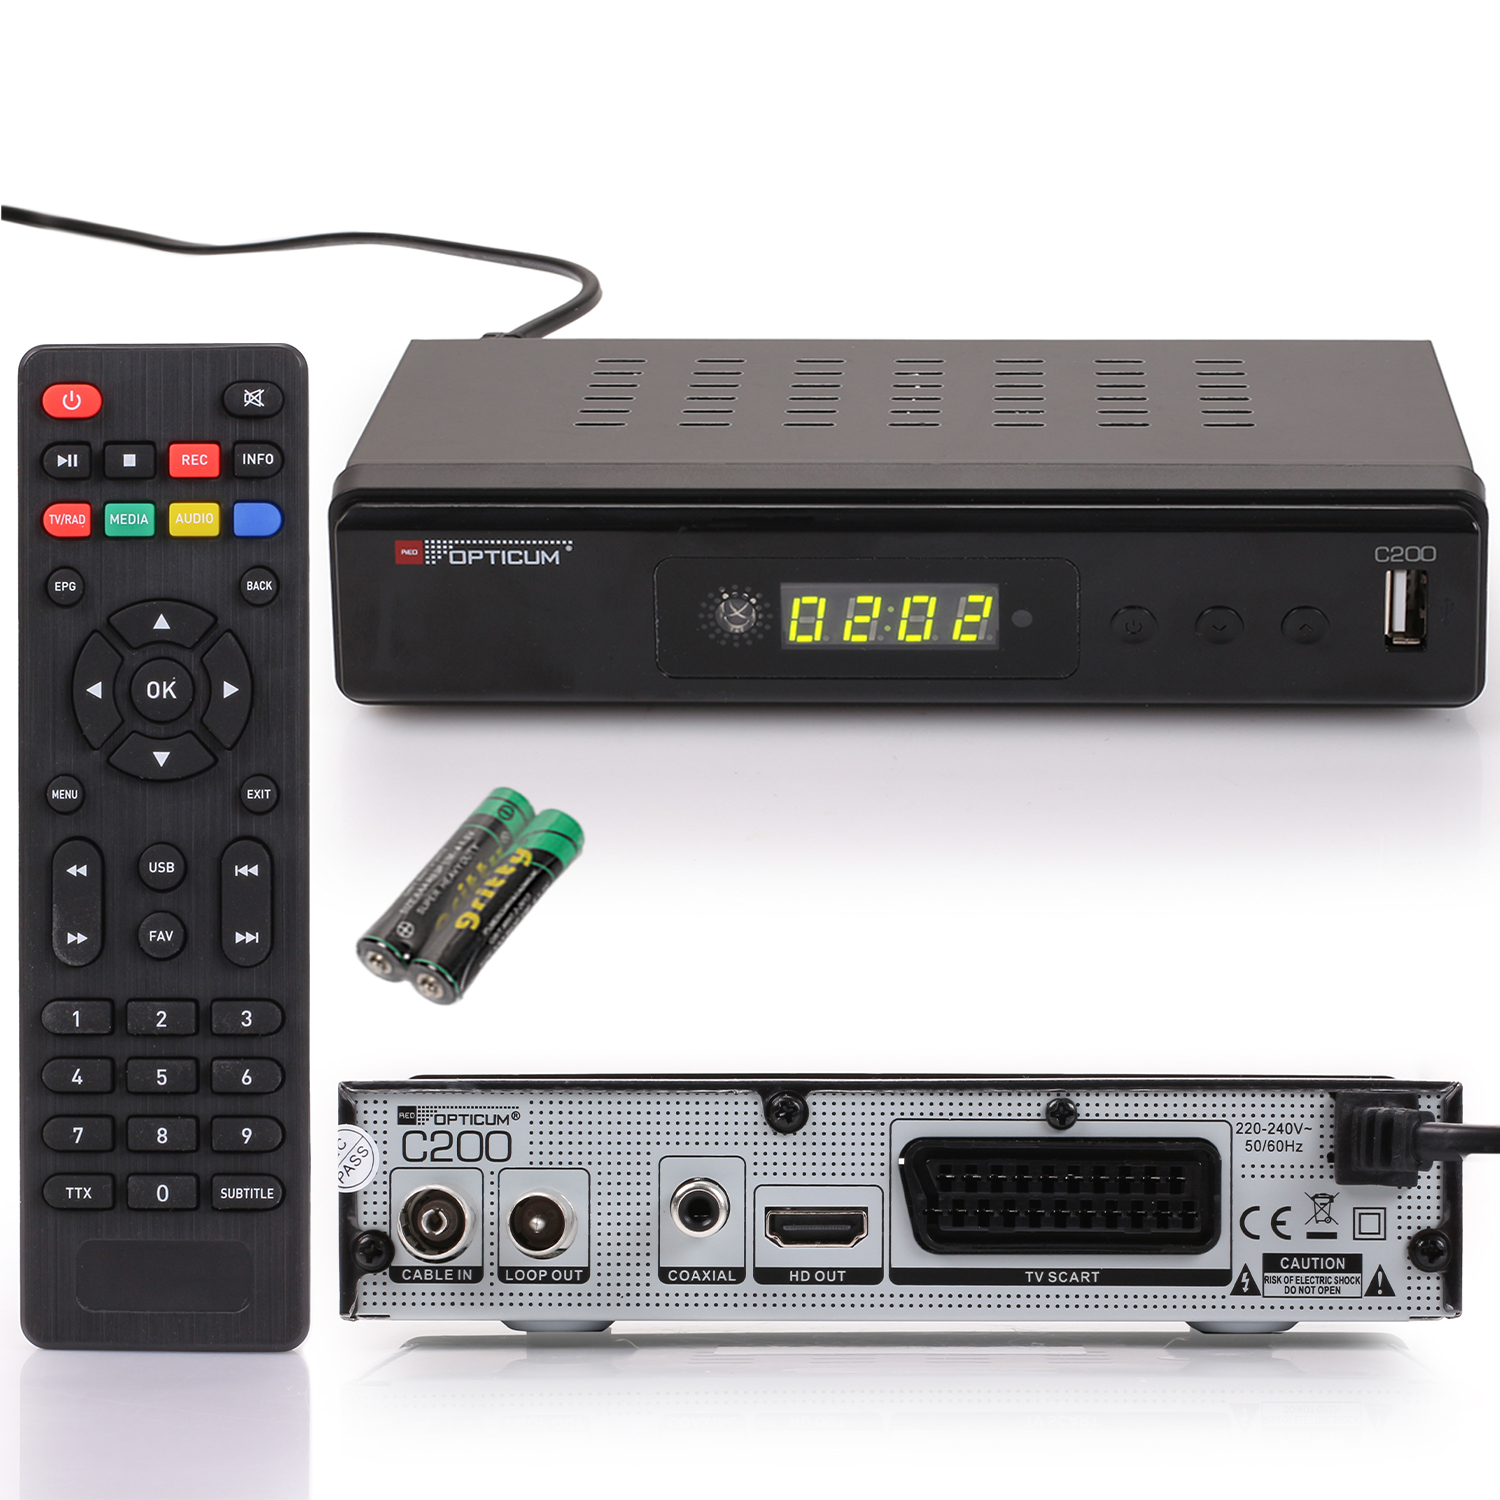 RED OPTICUM C200 HD - I HD Aufnahmefunktion Kabelreceiver Kabel-Receiver Receiver schwarz) DVB-C, DVB-C2, (HDTV, HDMI-USB-SCART DVB-C EPG PVR-Funktion, - mit Digitaler PVR